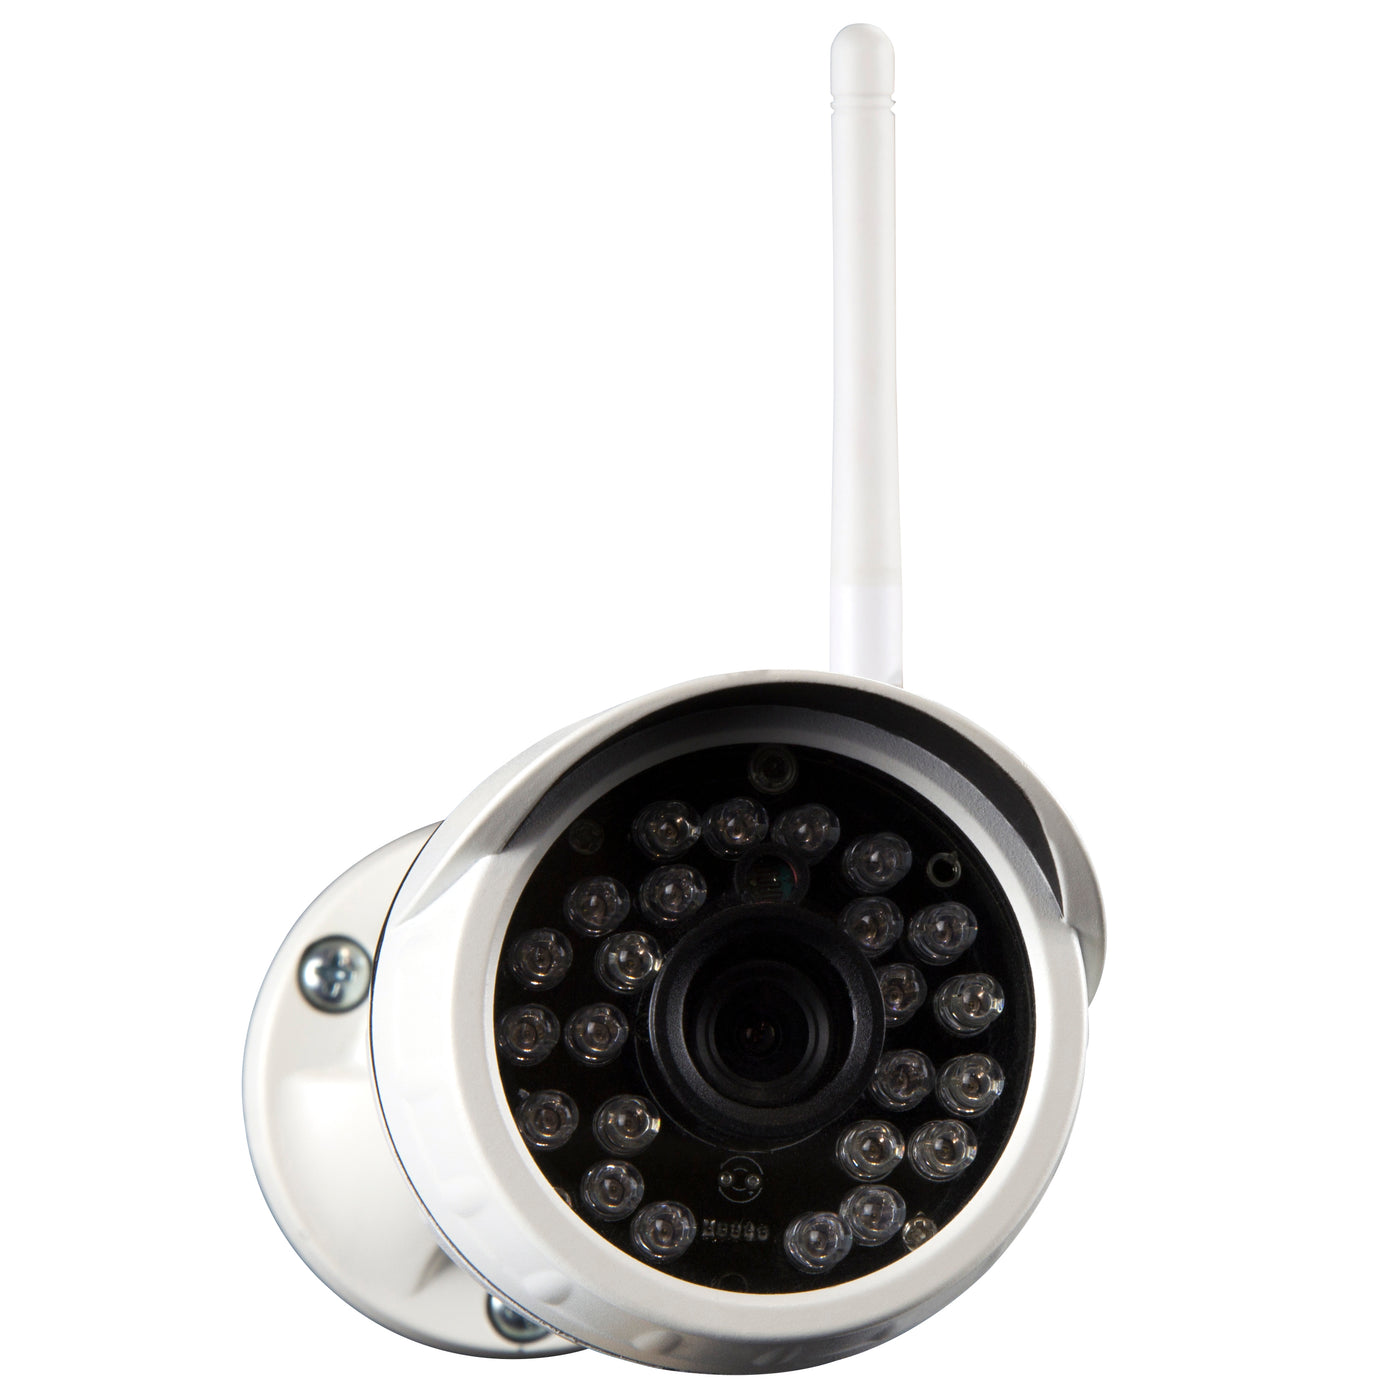 Alecto DVC-215IP - Outdoor Wi-Fi camera - White